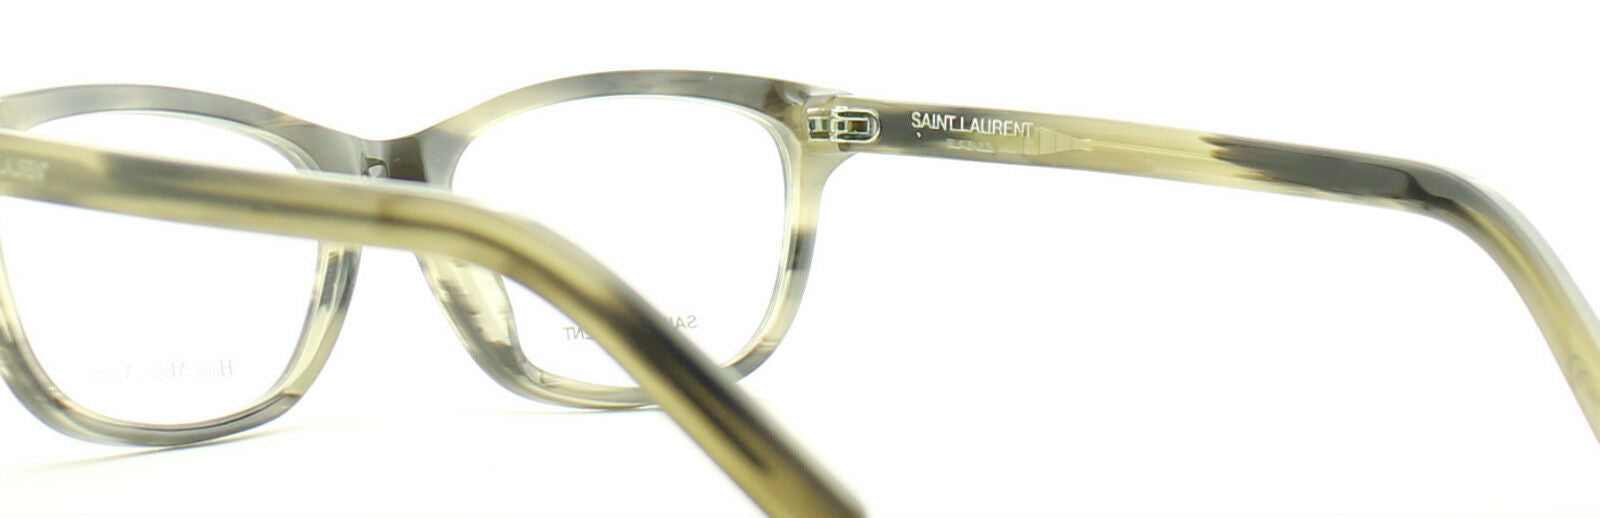 Yves Saint Laurent SL 12 WT3 Eyewear FRAMES RX Optical Eyeglasses Glasses - New